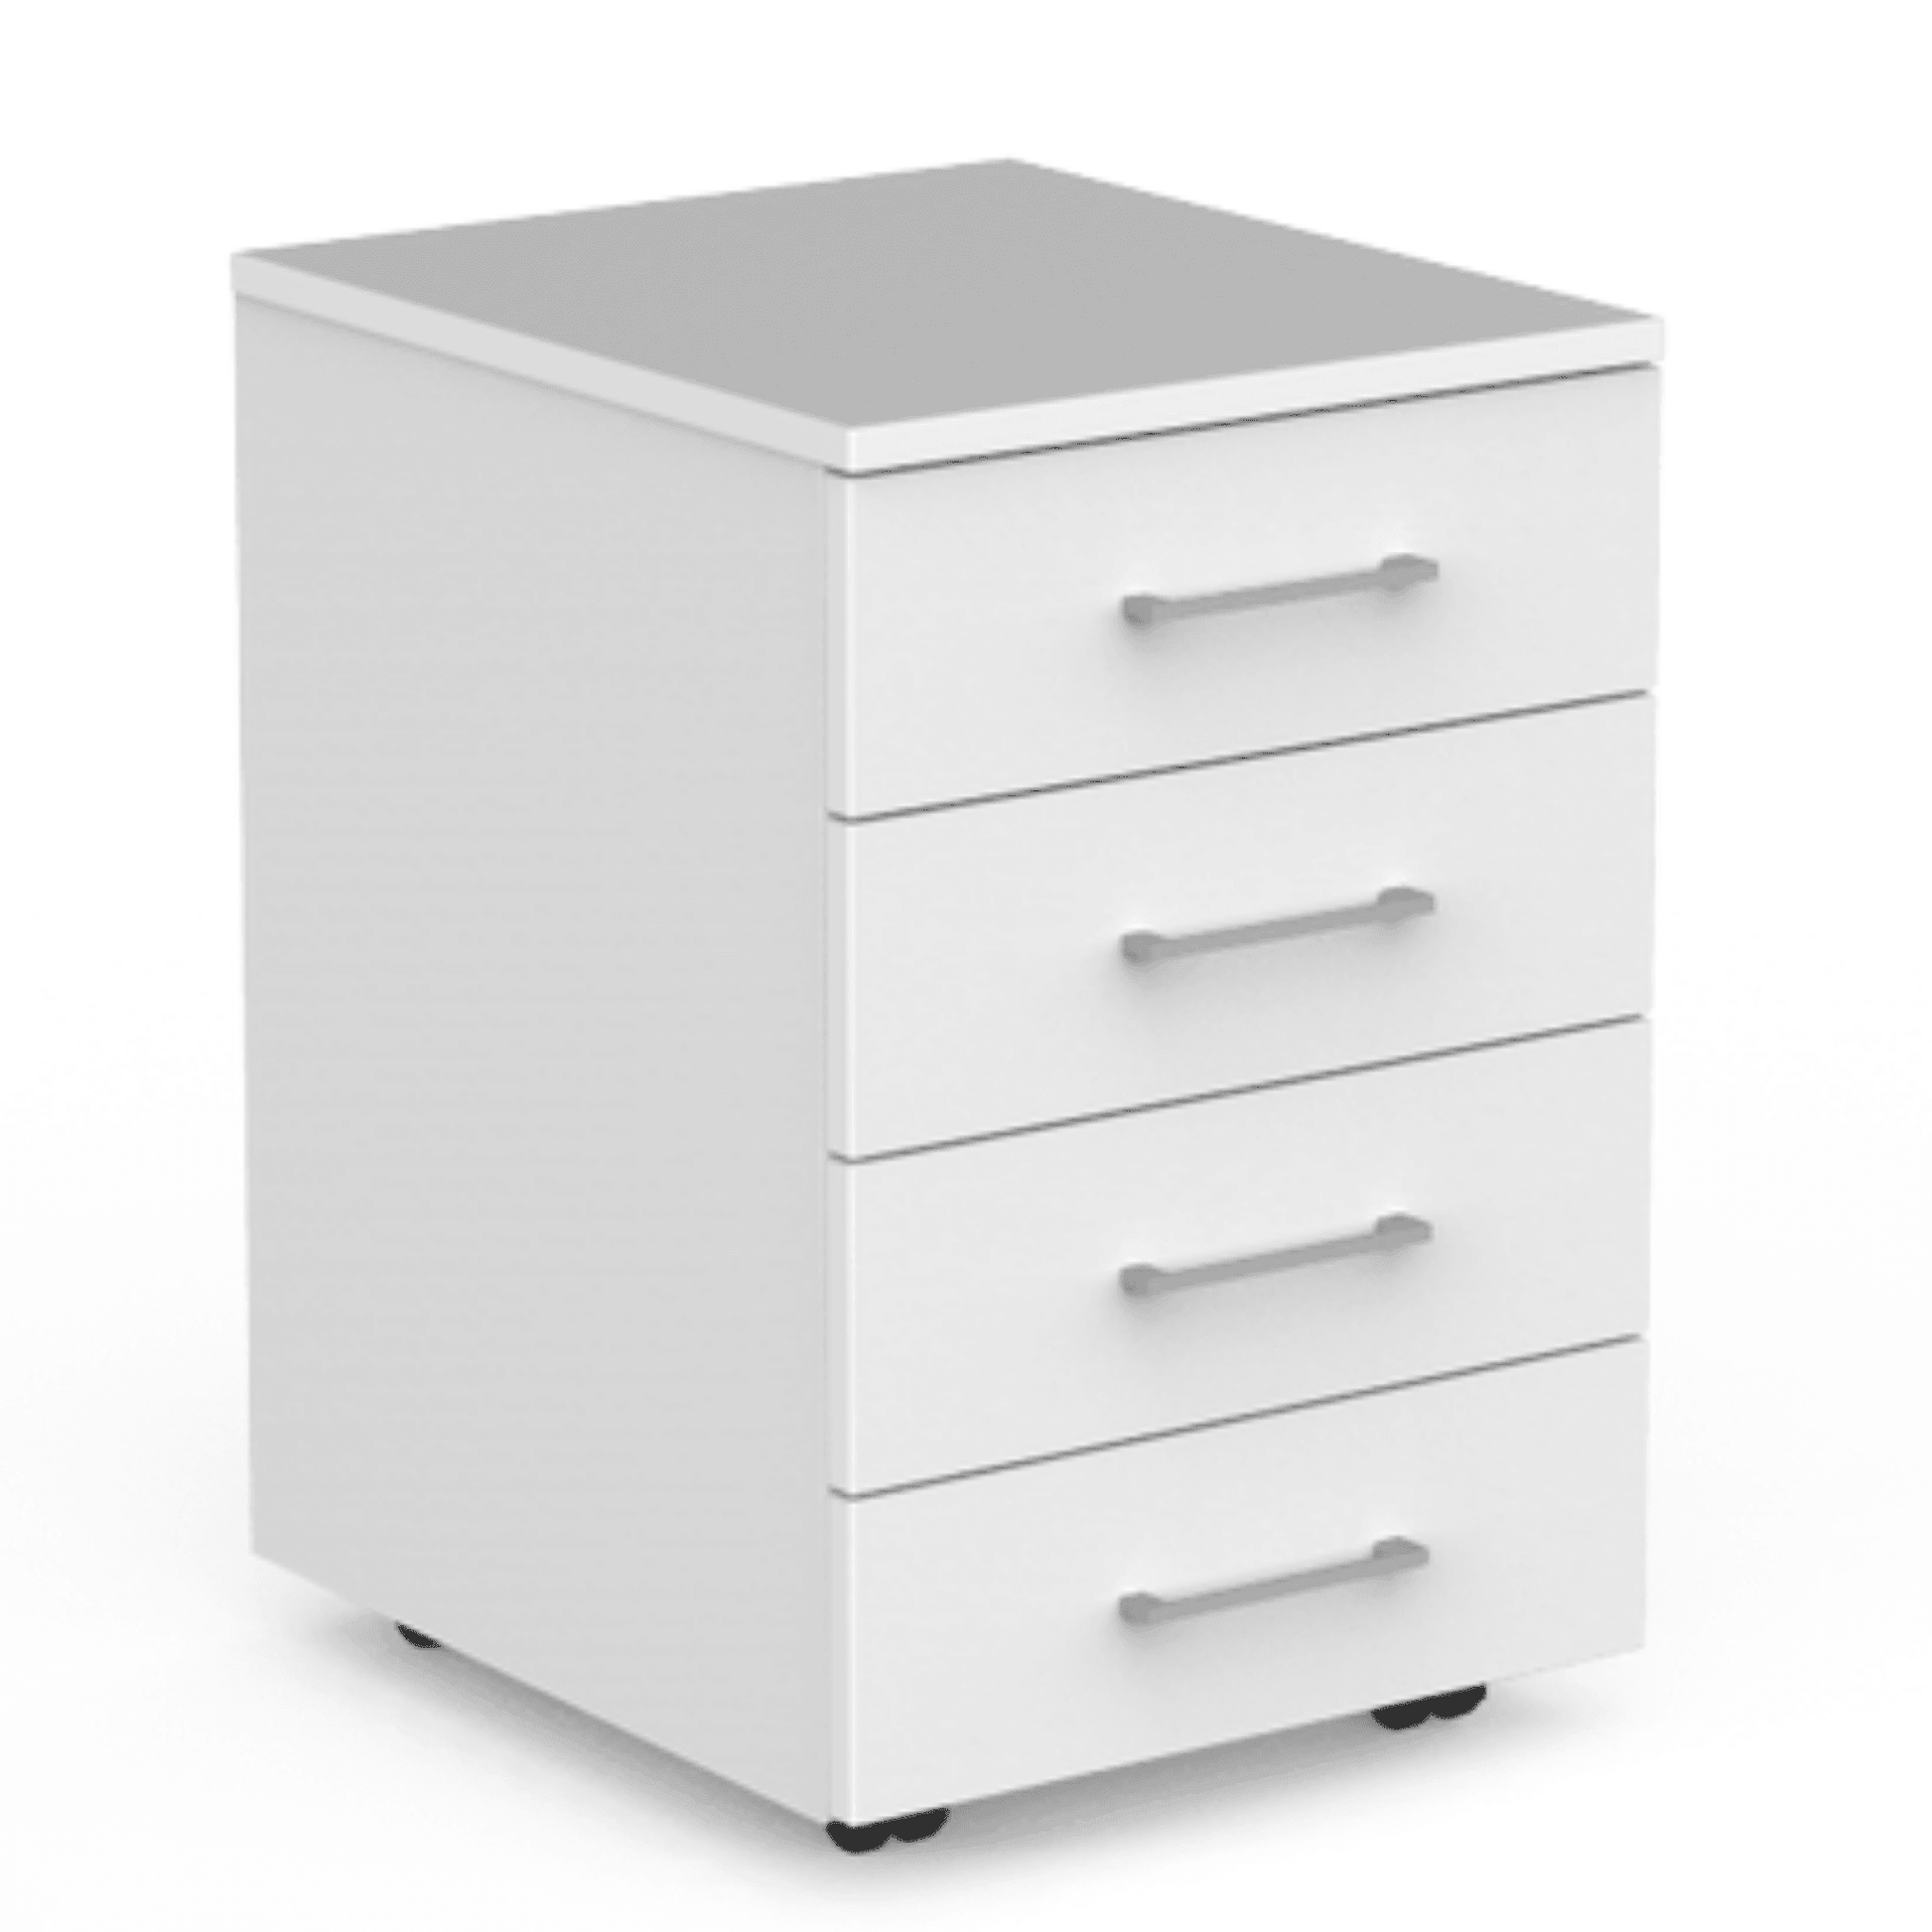 EkoSystem Mobile Pedestal 4 Drawer Unit - Office Furniture Company 